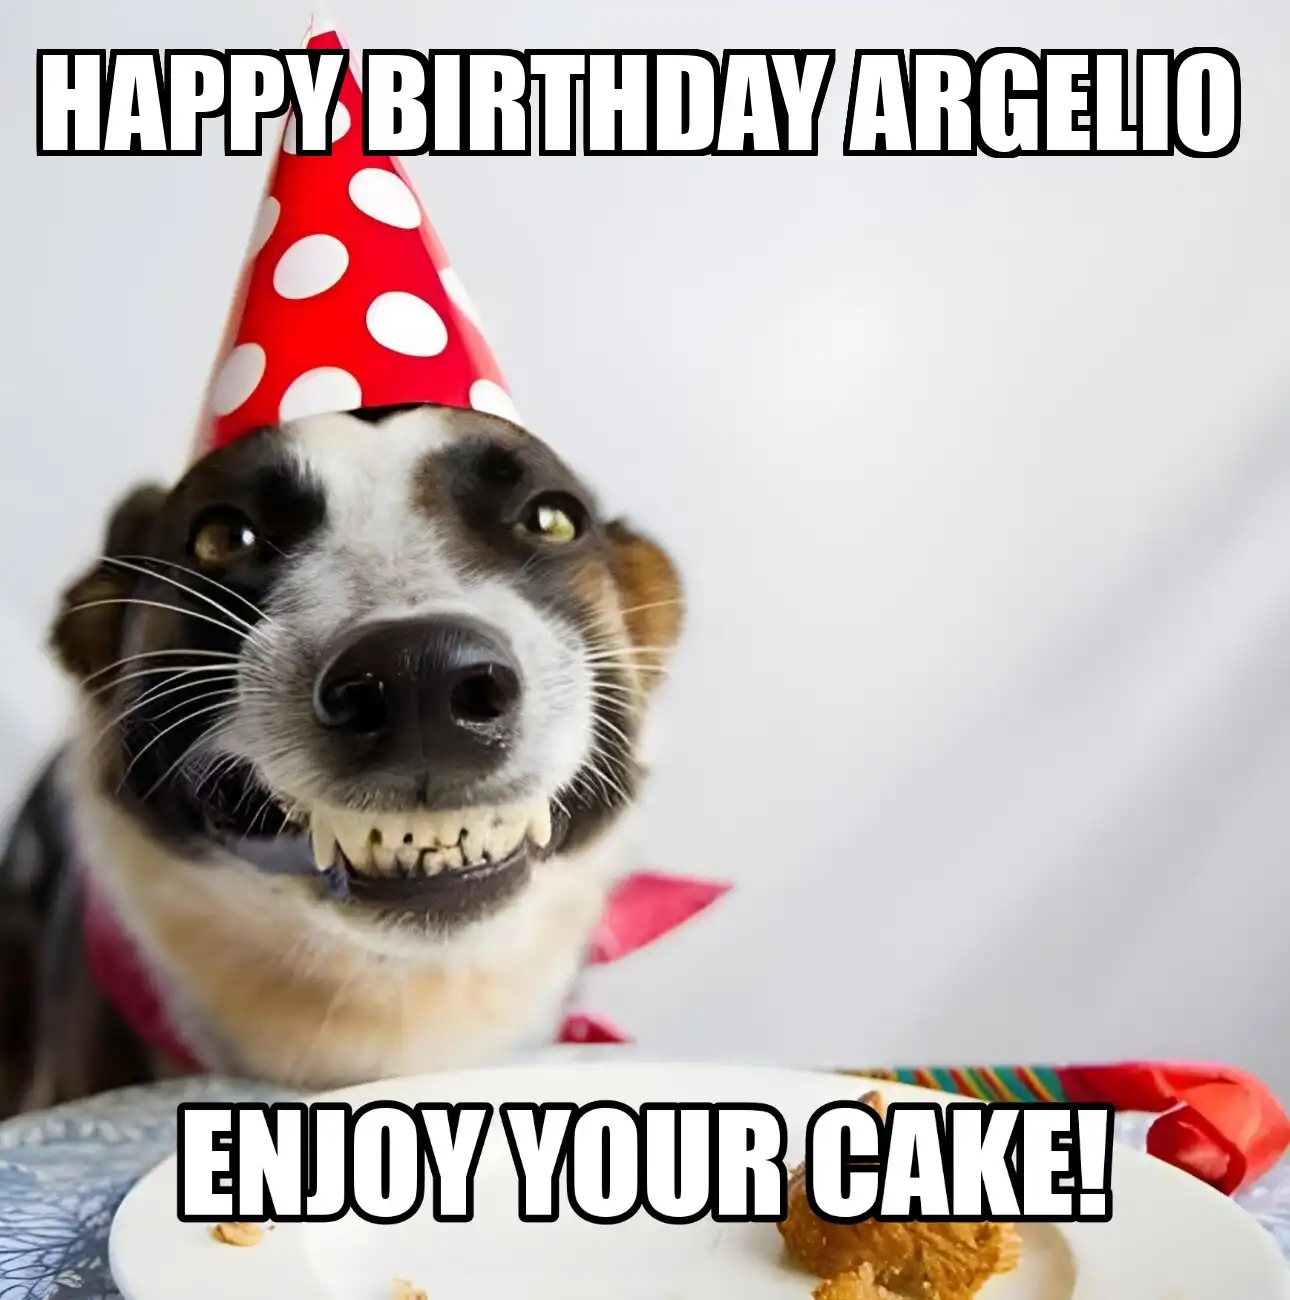 Happy Birthday Argelio Enjoy Your Cake Dog Meme